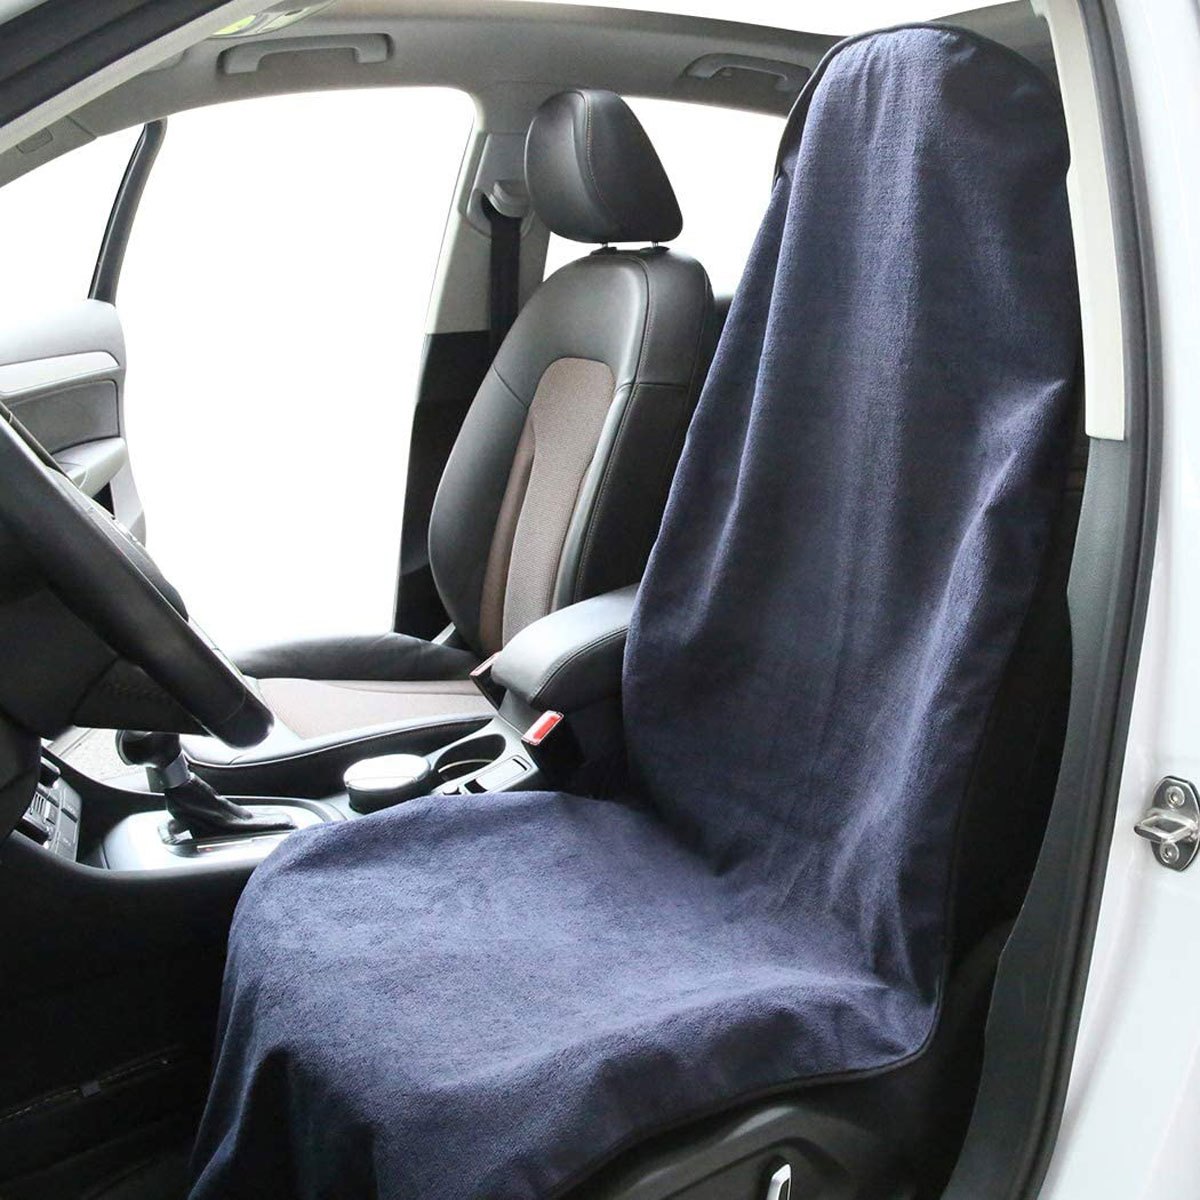 Leader Accessories Grey Waterproof Towel Auto Car Seat Cover Machine W